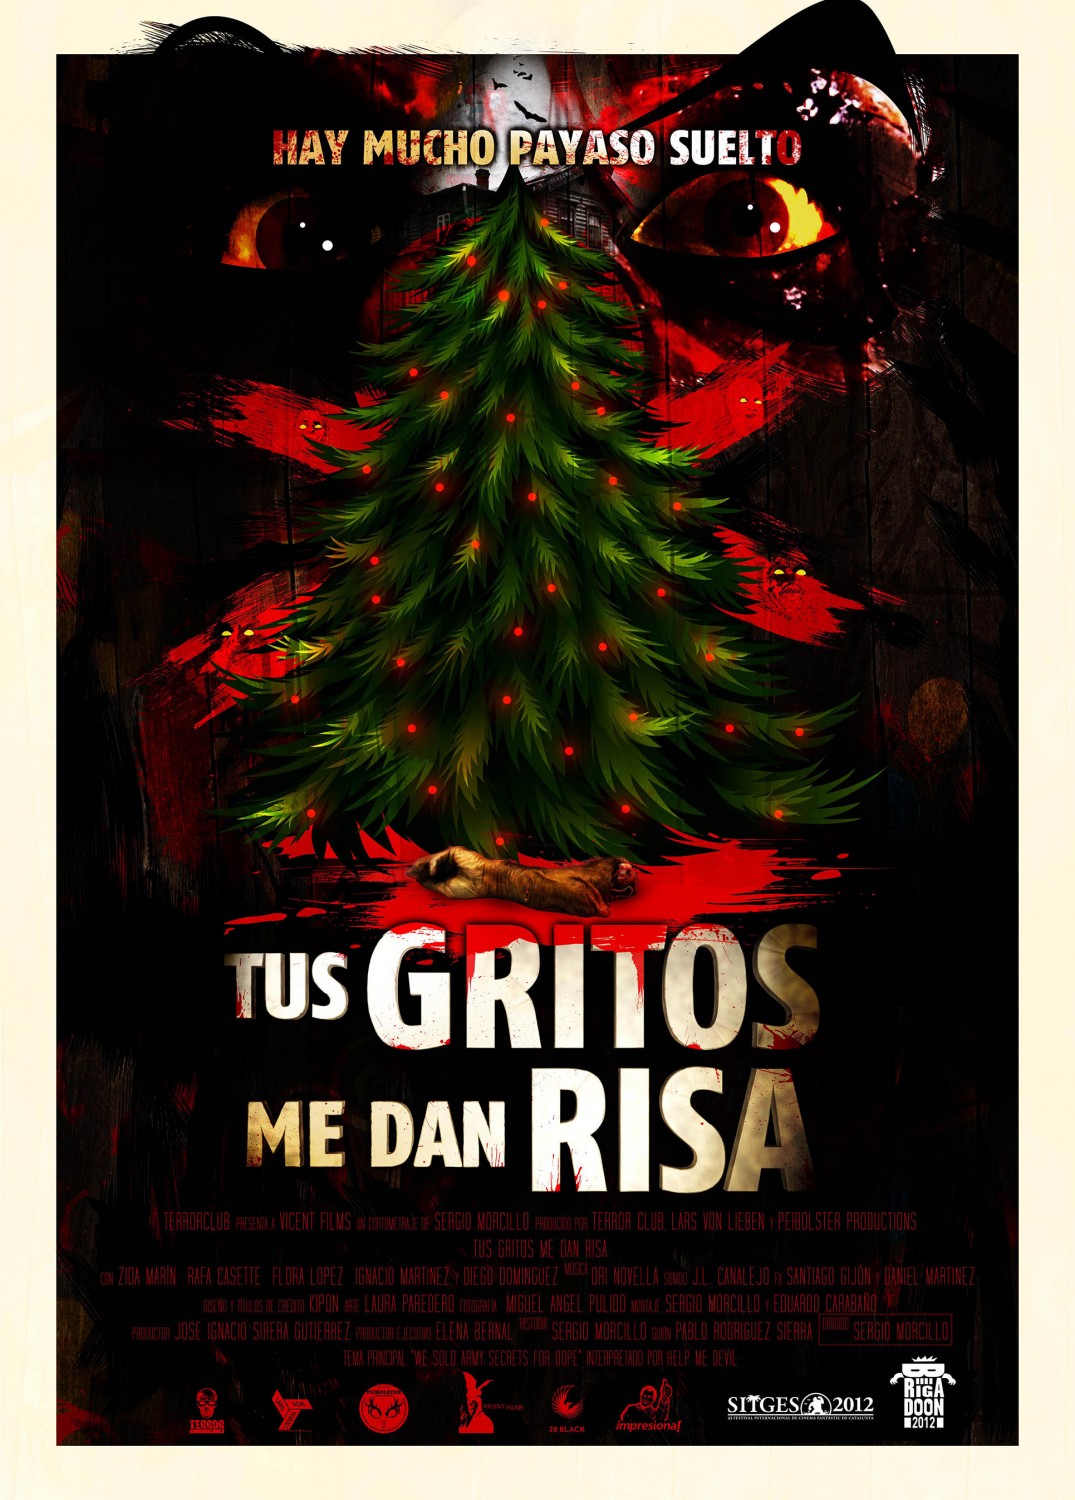 Extra Large Movie Poster Image for Tus gritos me dan risa